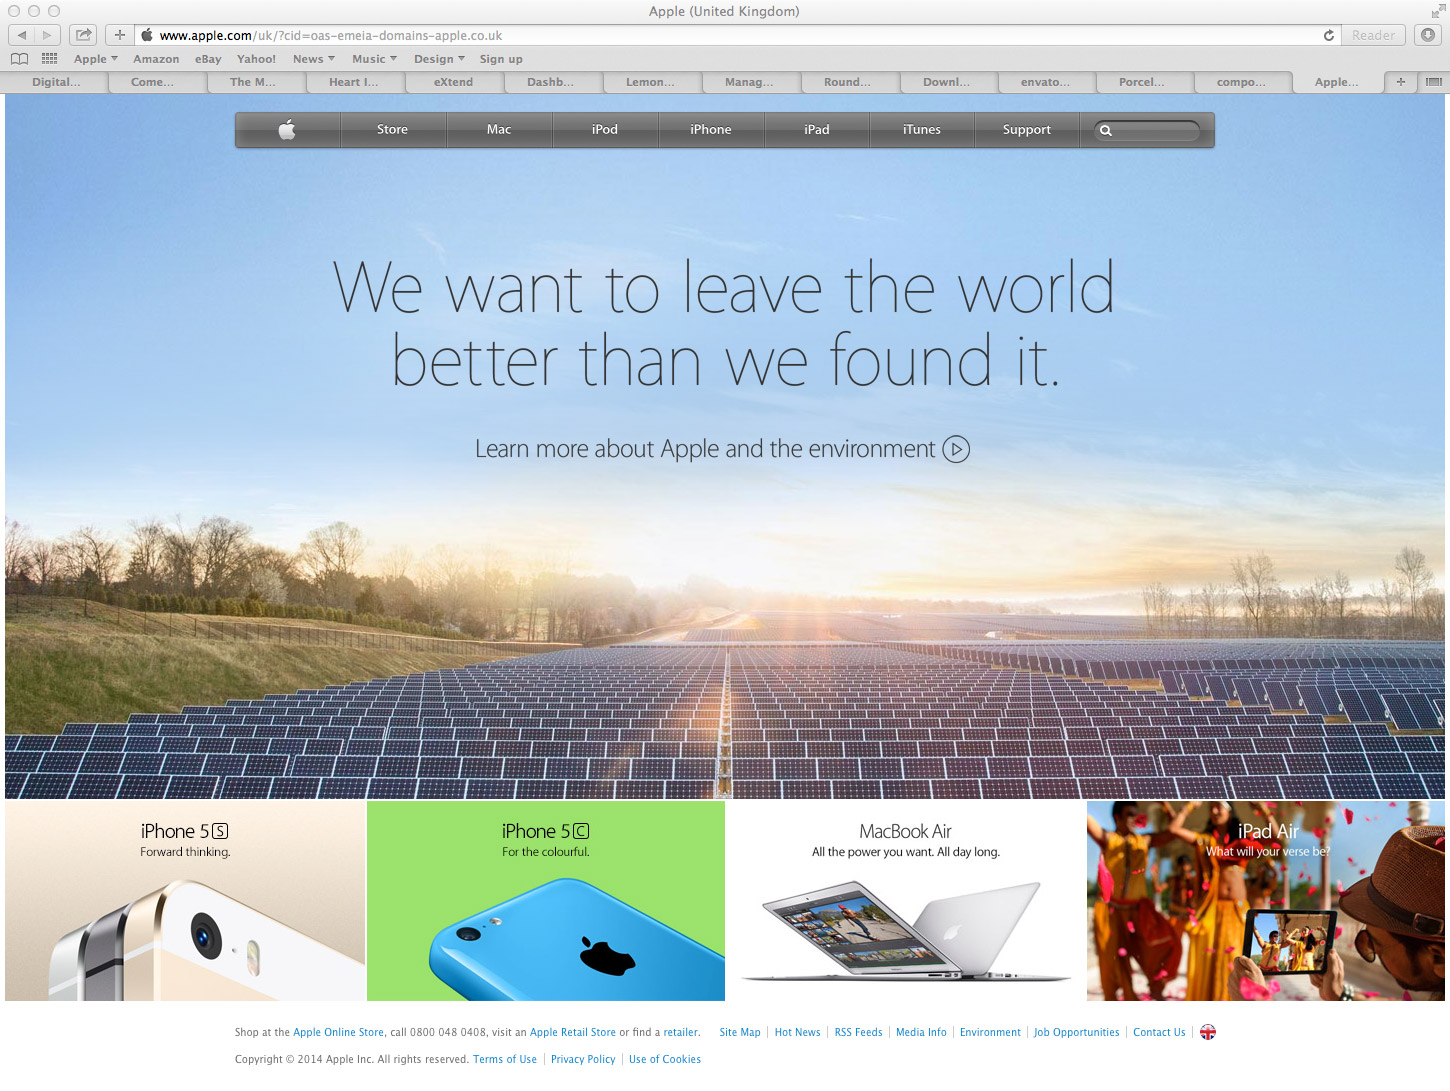 Apple marketing gone mad?